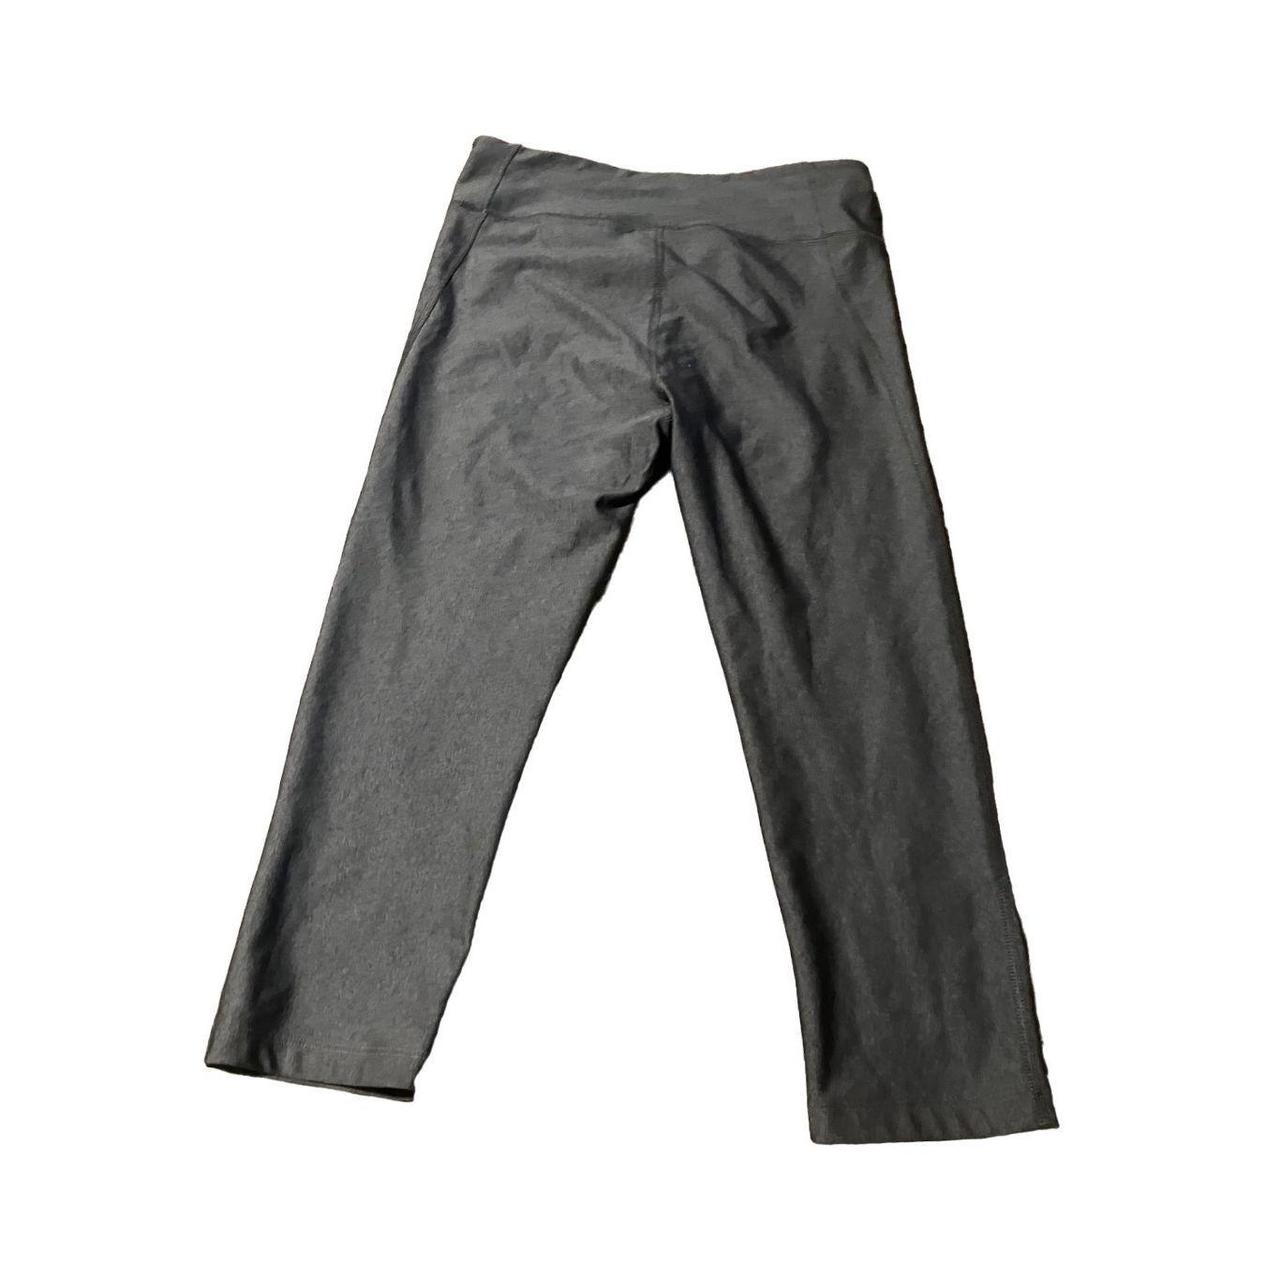 👽Under Armour grey compression leggings 👽Size - Depop